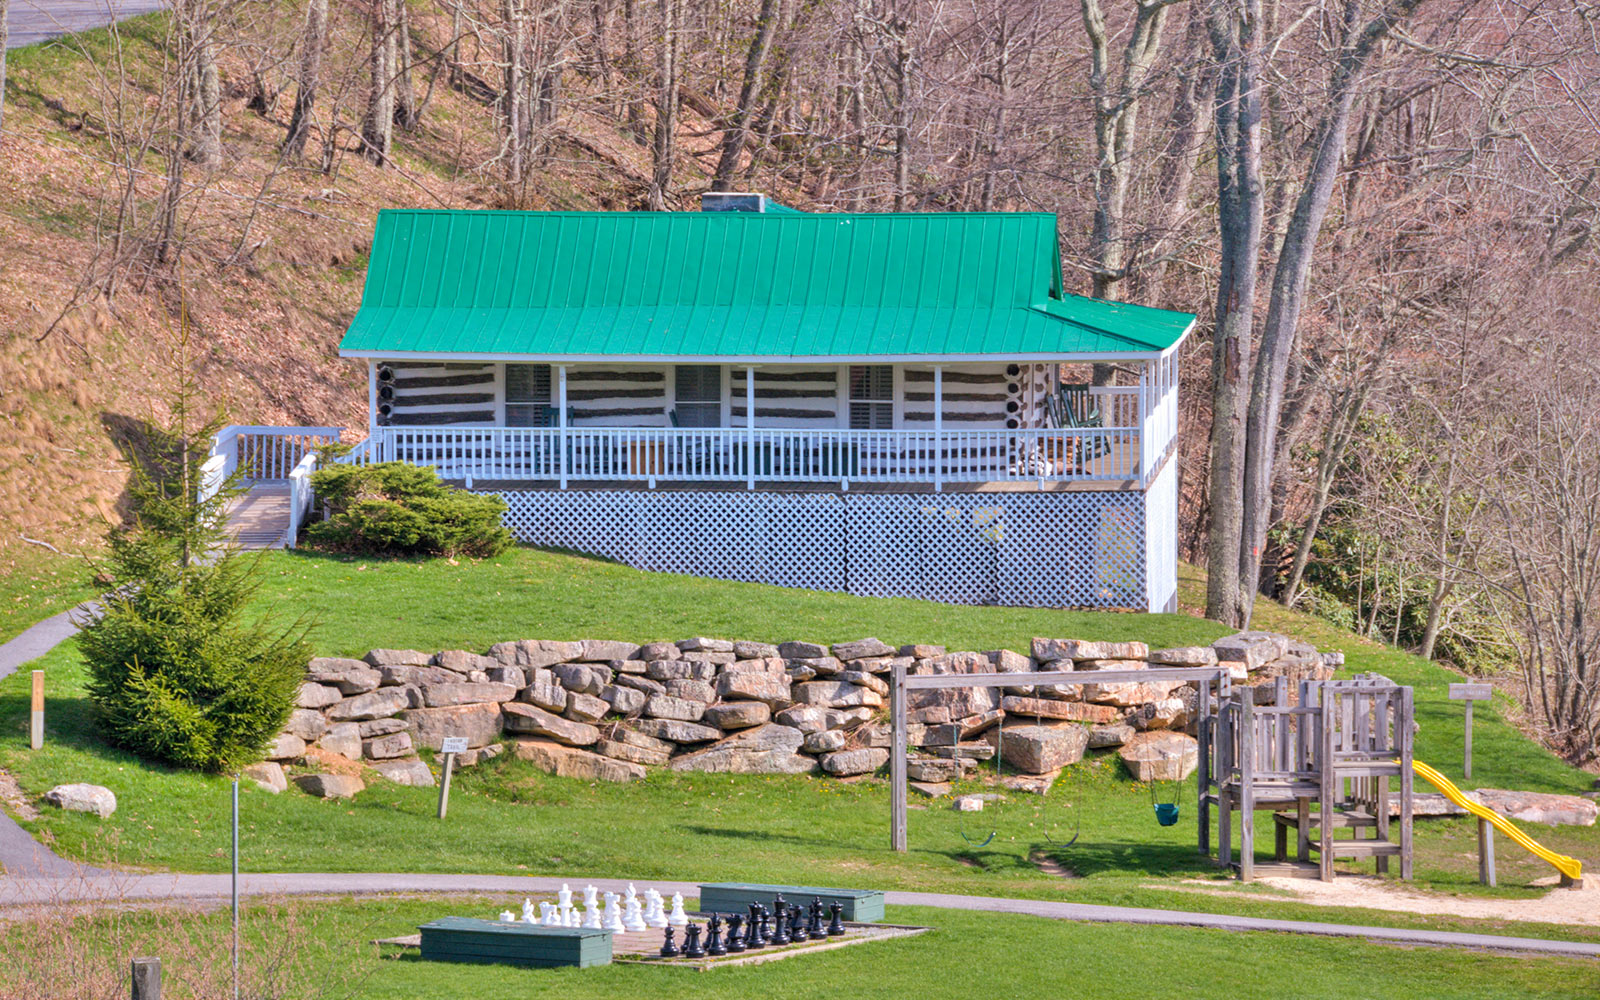 Lawn & Historic Rustic Cabins at Mountain Lake Lodge, Virginia 